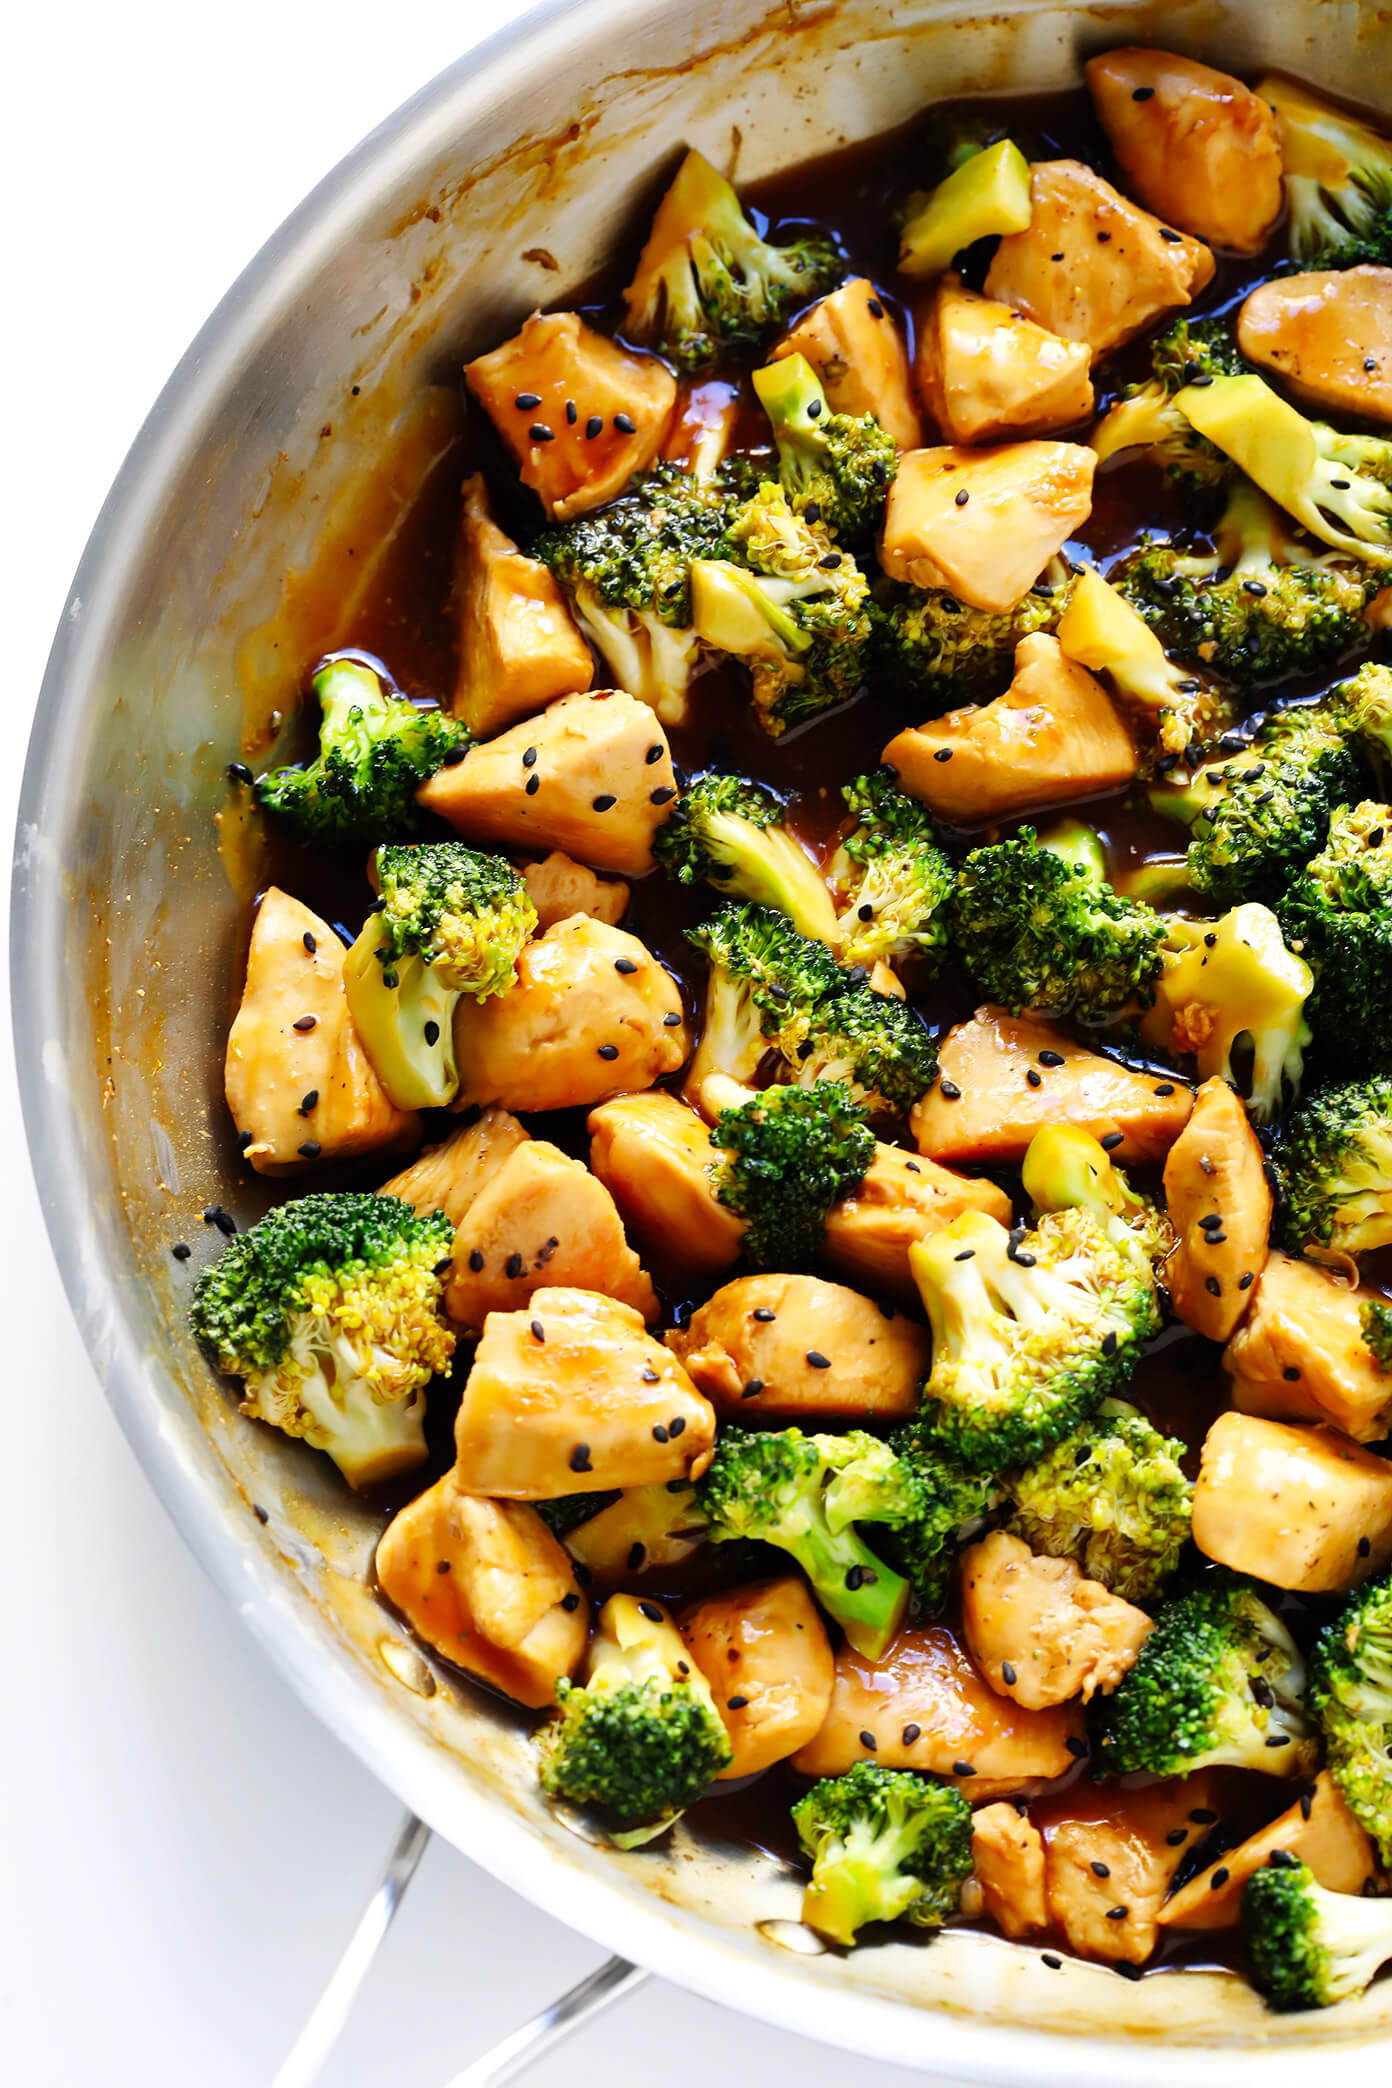 Easy Chicken And Broccoli Recipes
 12 Minute Chicken and Broccoli